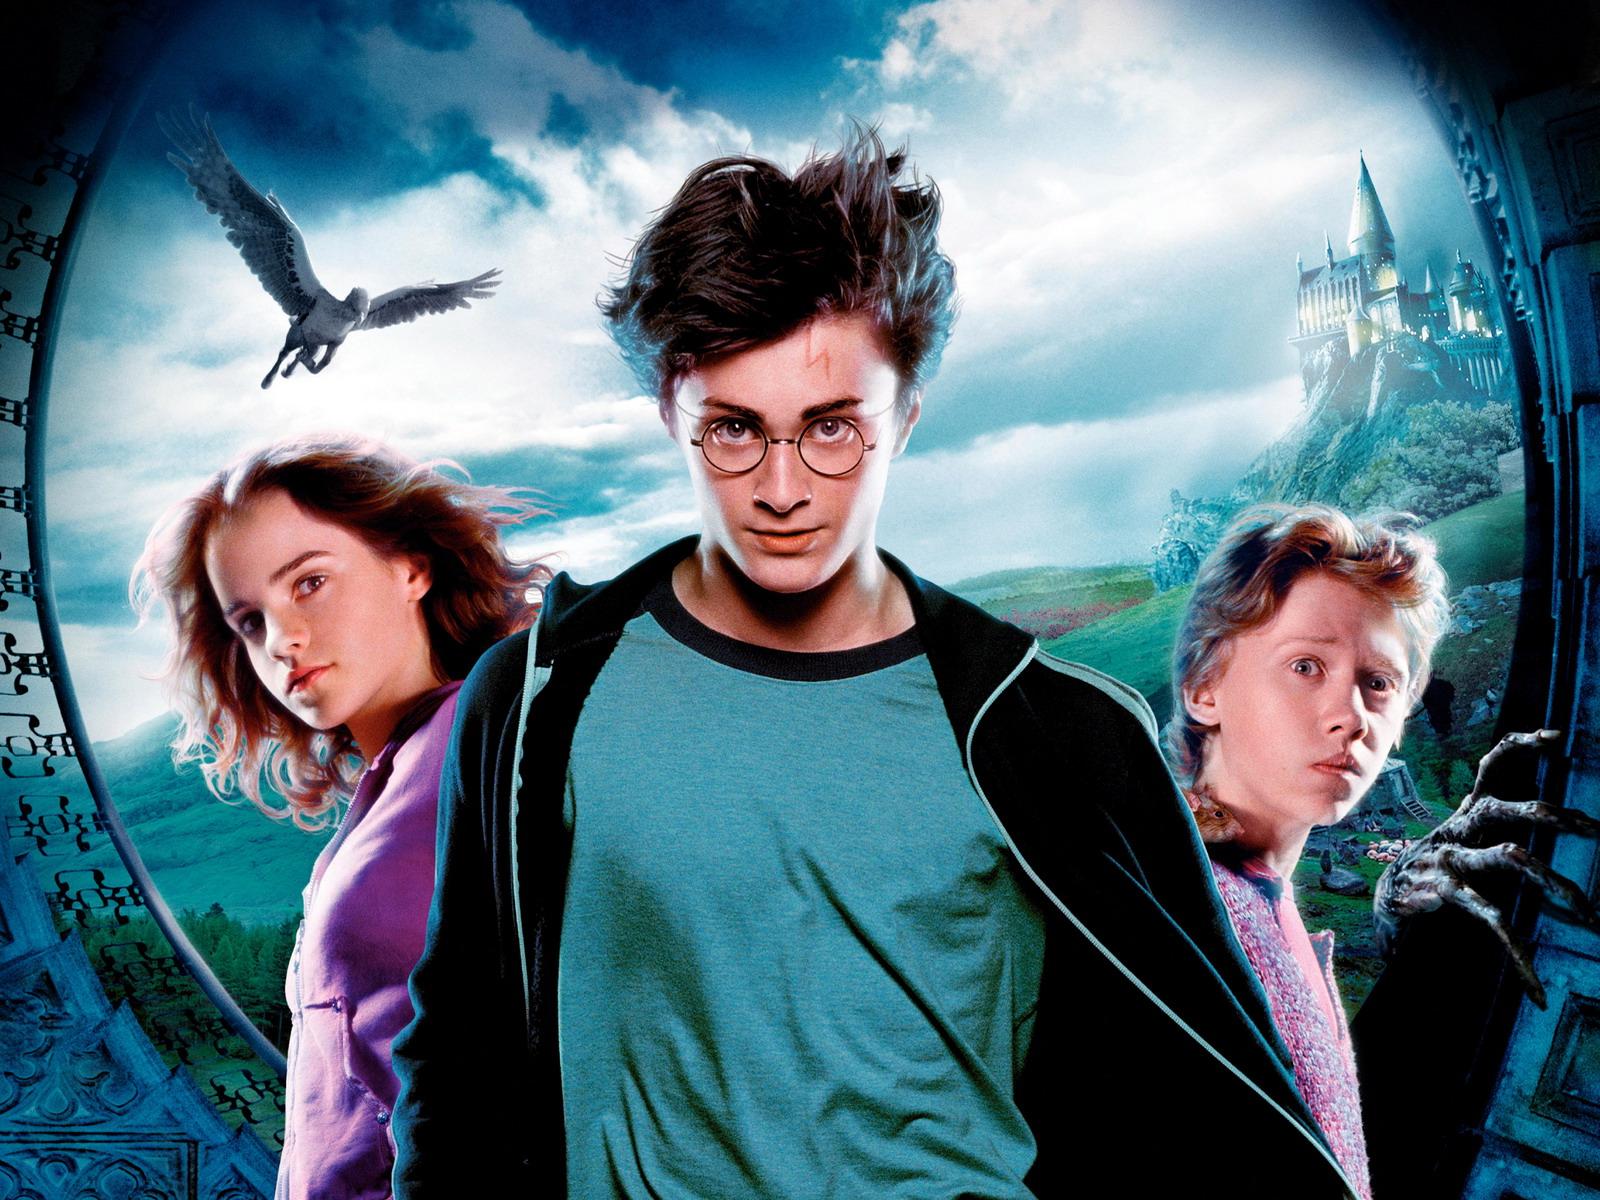 Harry Potter And The Prisoner Of Azkaban Wallpapers